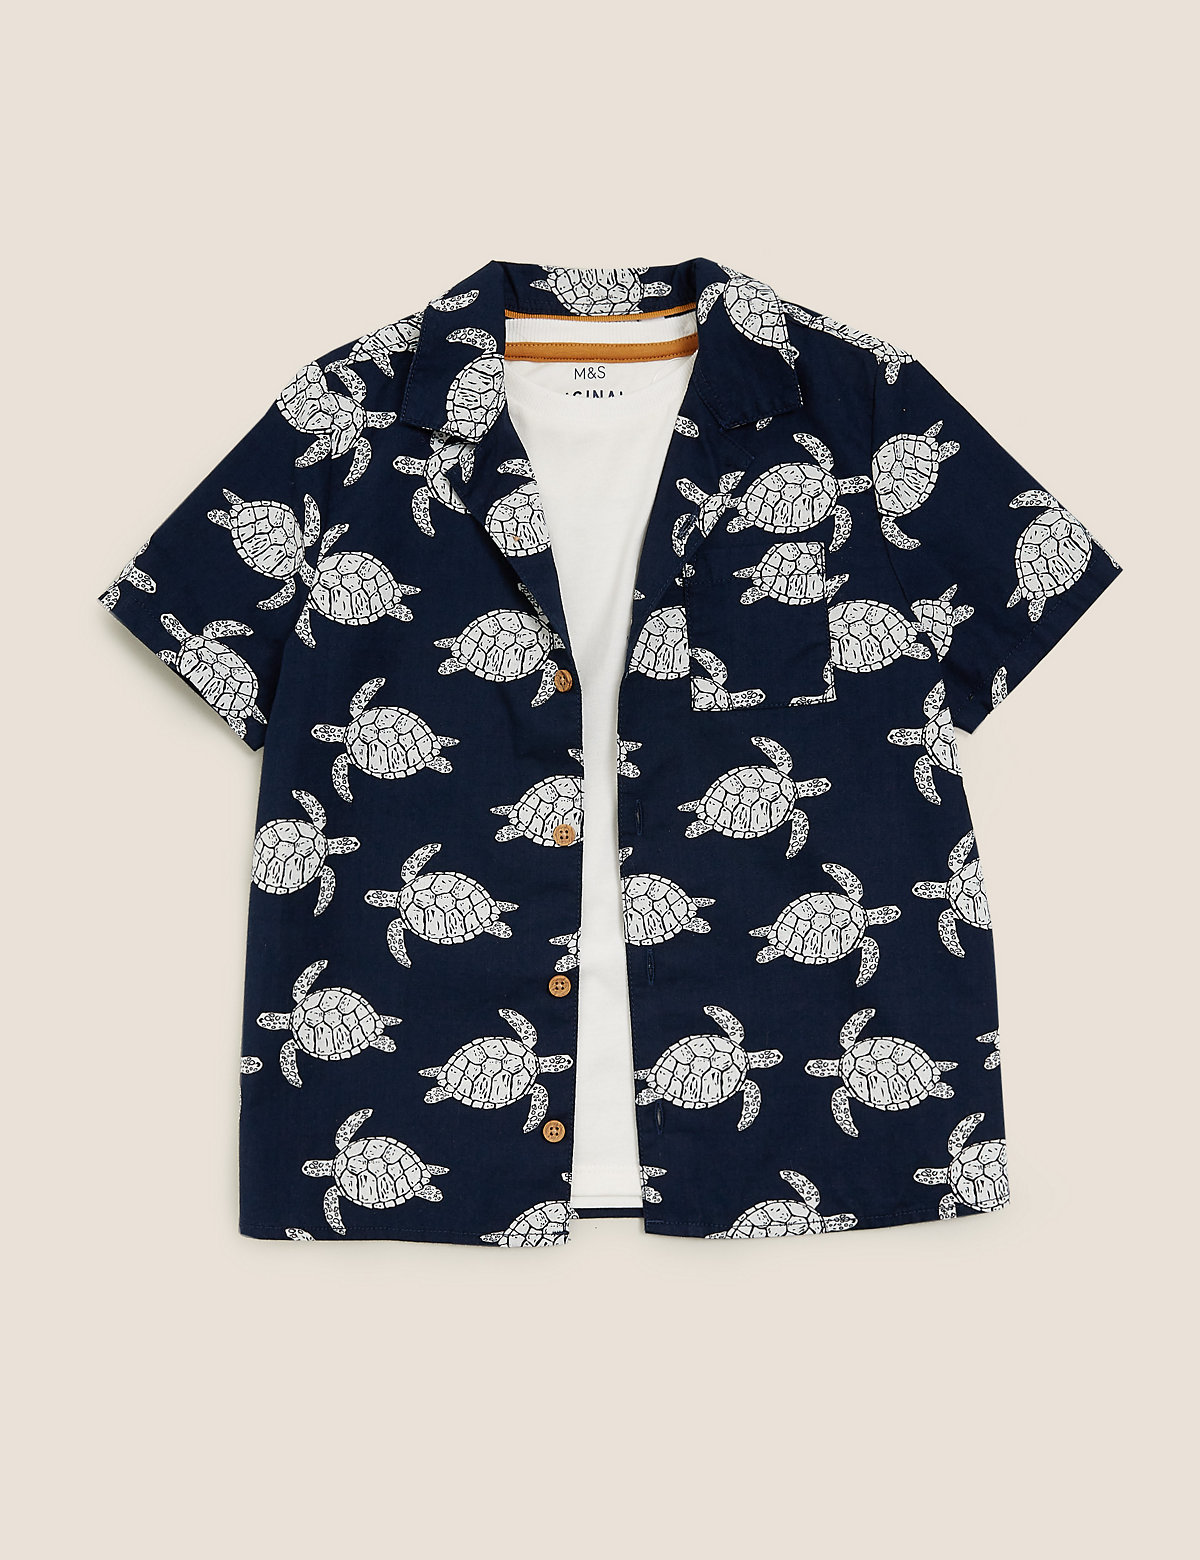 2pc Cotton Turtle Print Shirt with Shirt